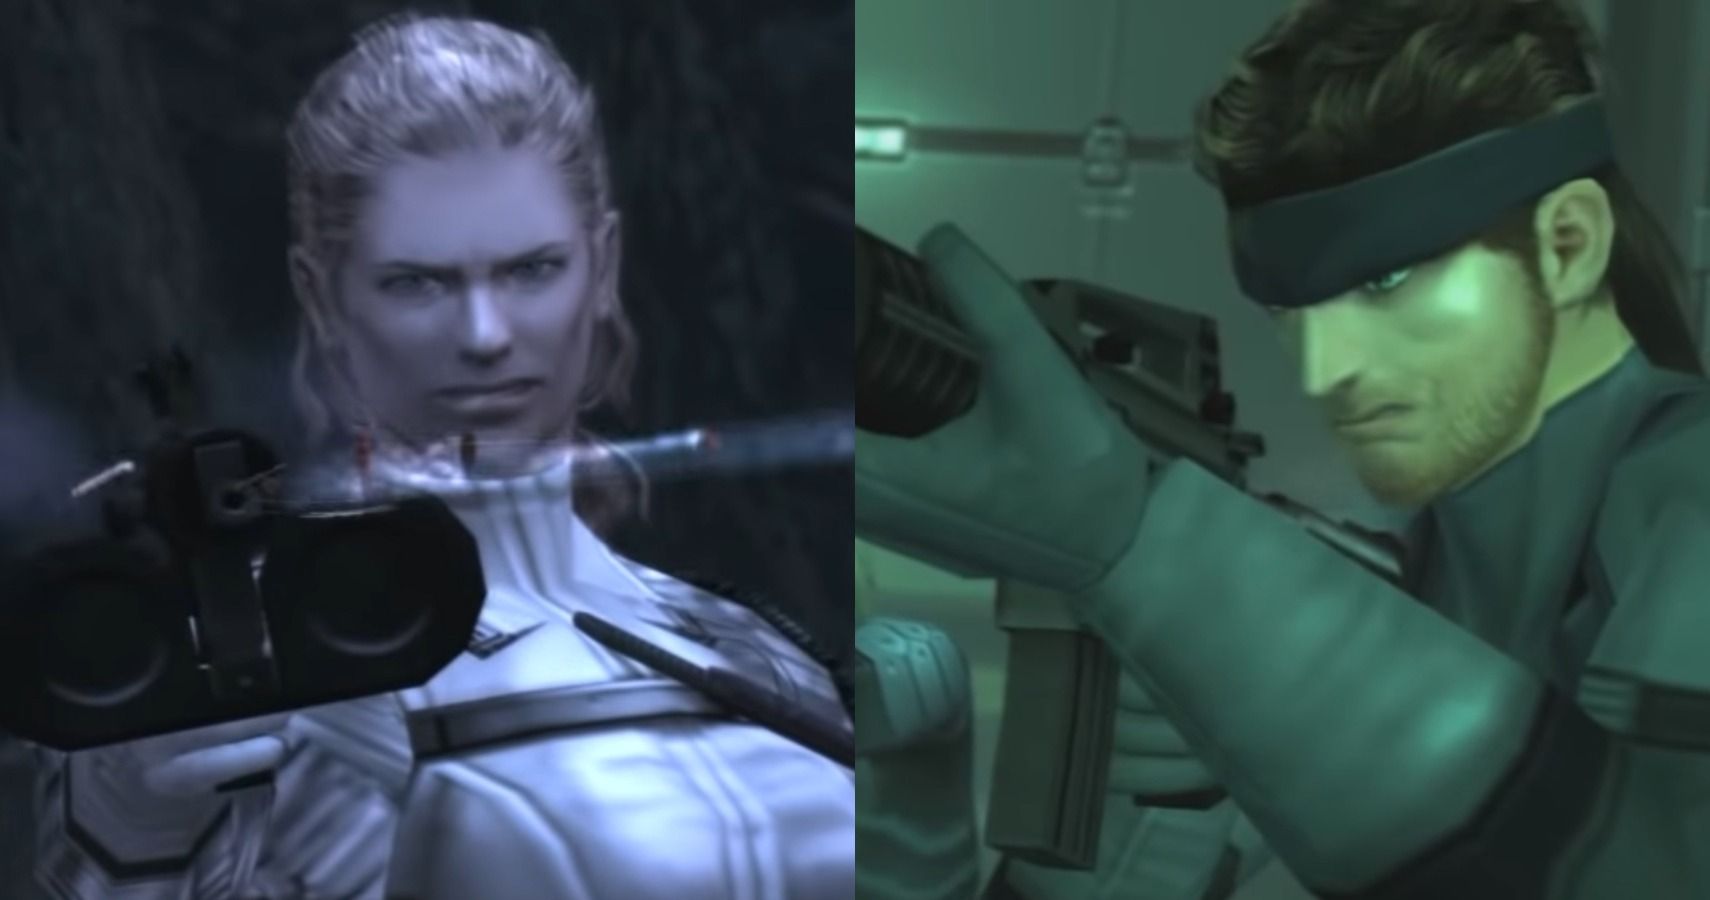 Top Strongest Metal Gear Rising: Revengeance Characters メタルギア ライジング リベンジェンス  